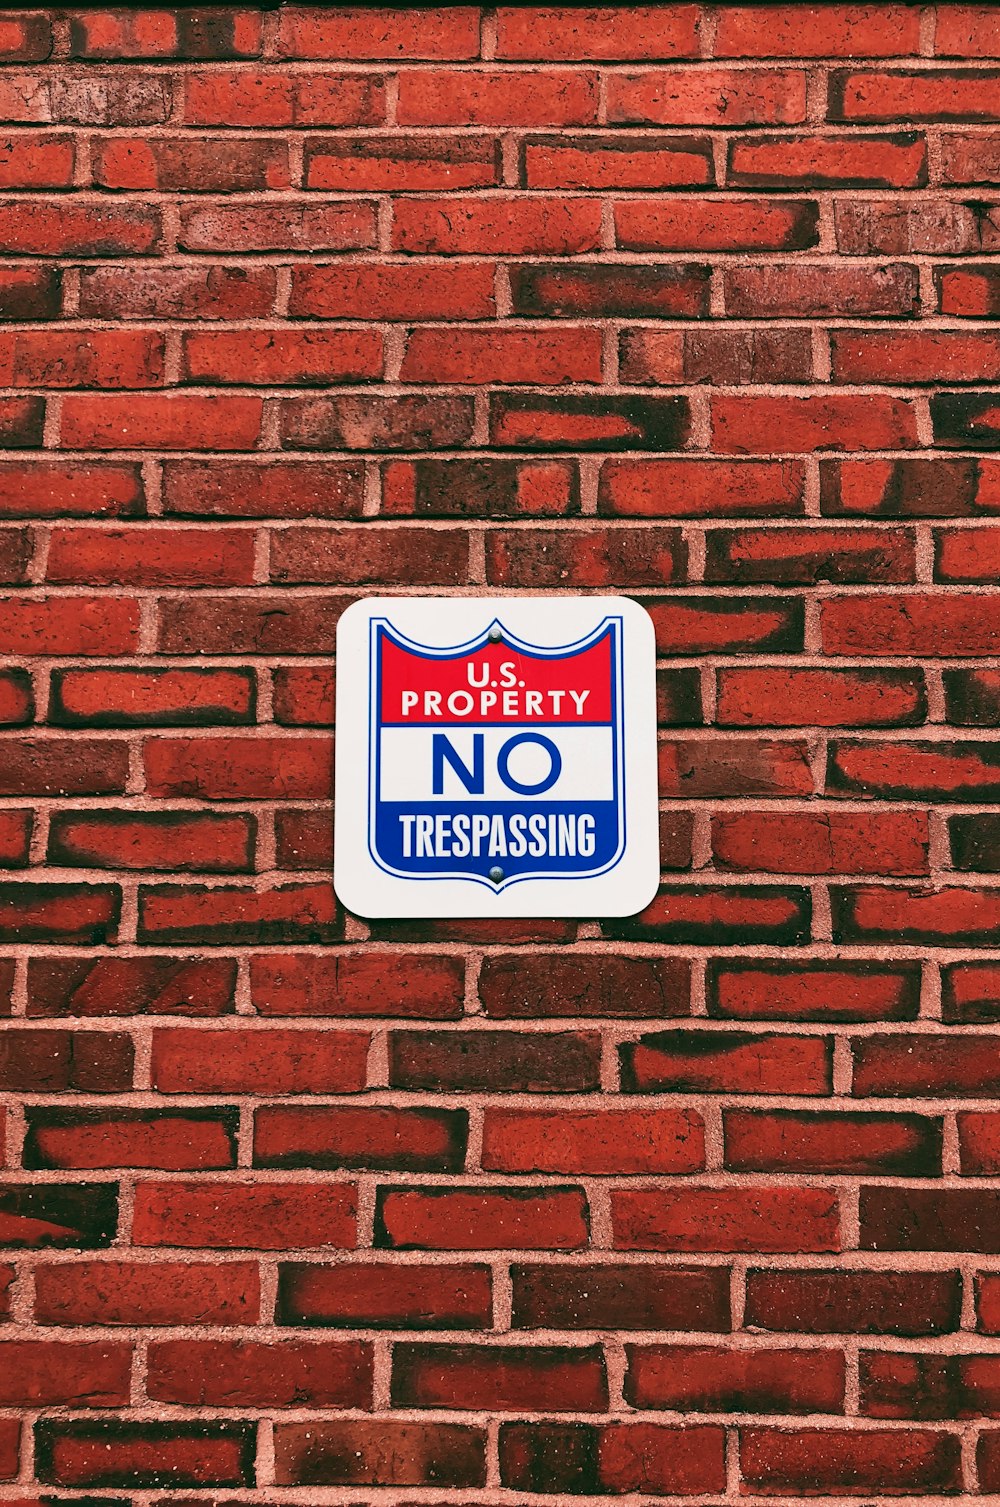 US Property No Trespassing signage